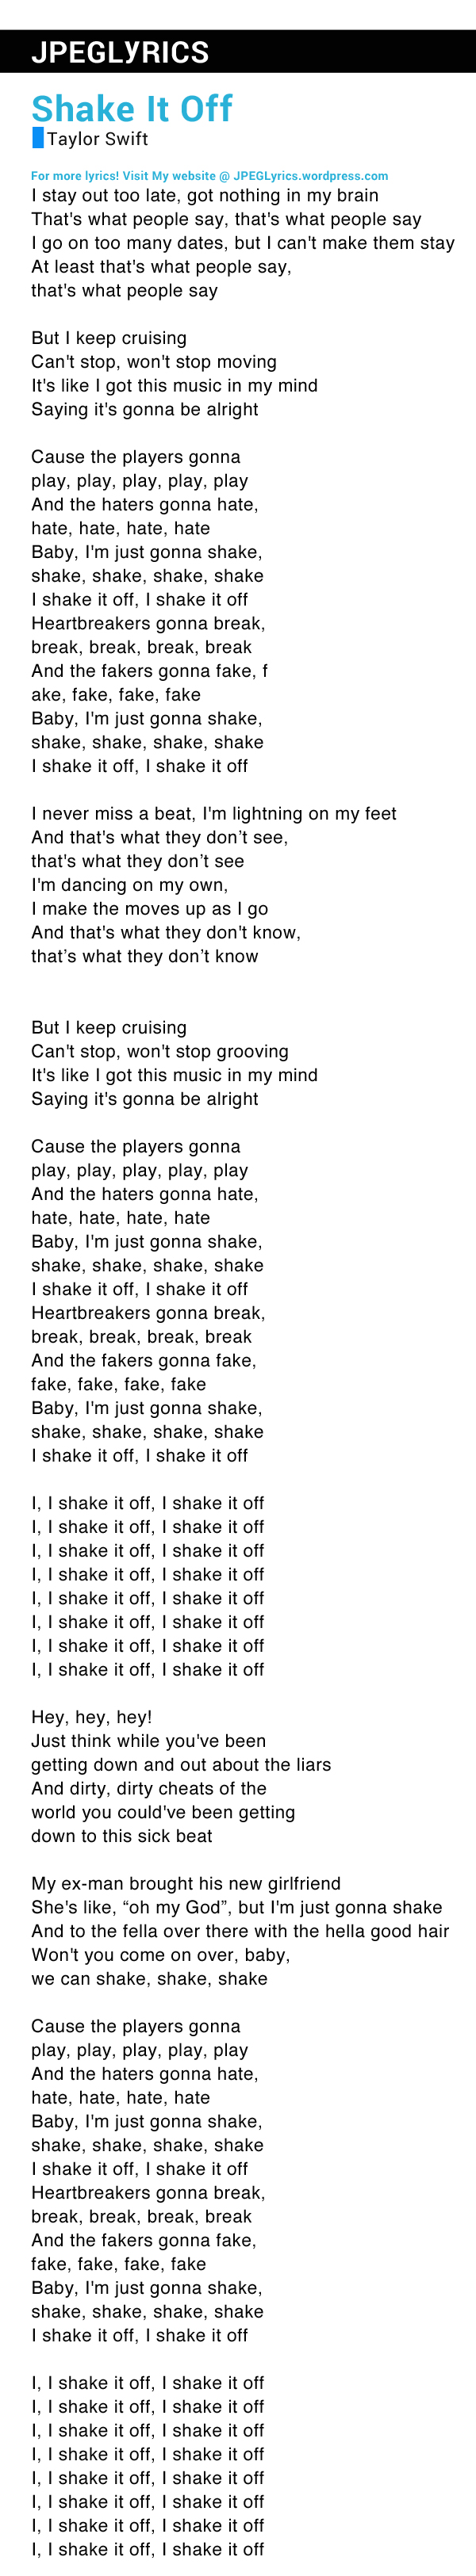 Shake It Up Song Lyrics Taylor Swift